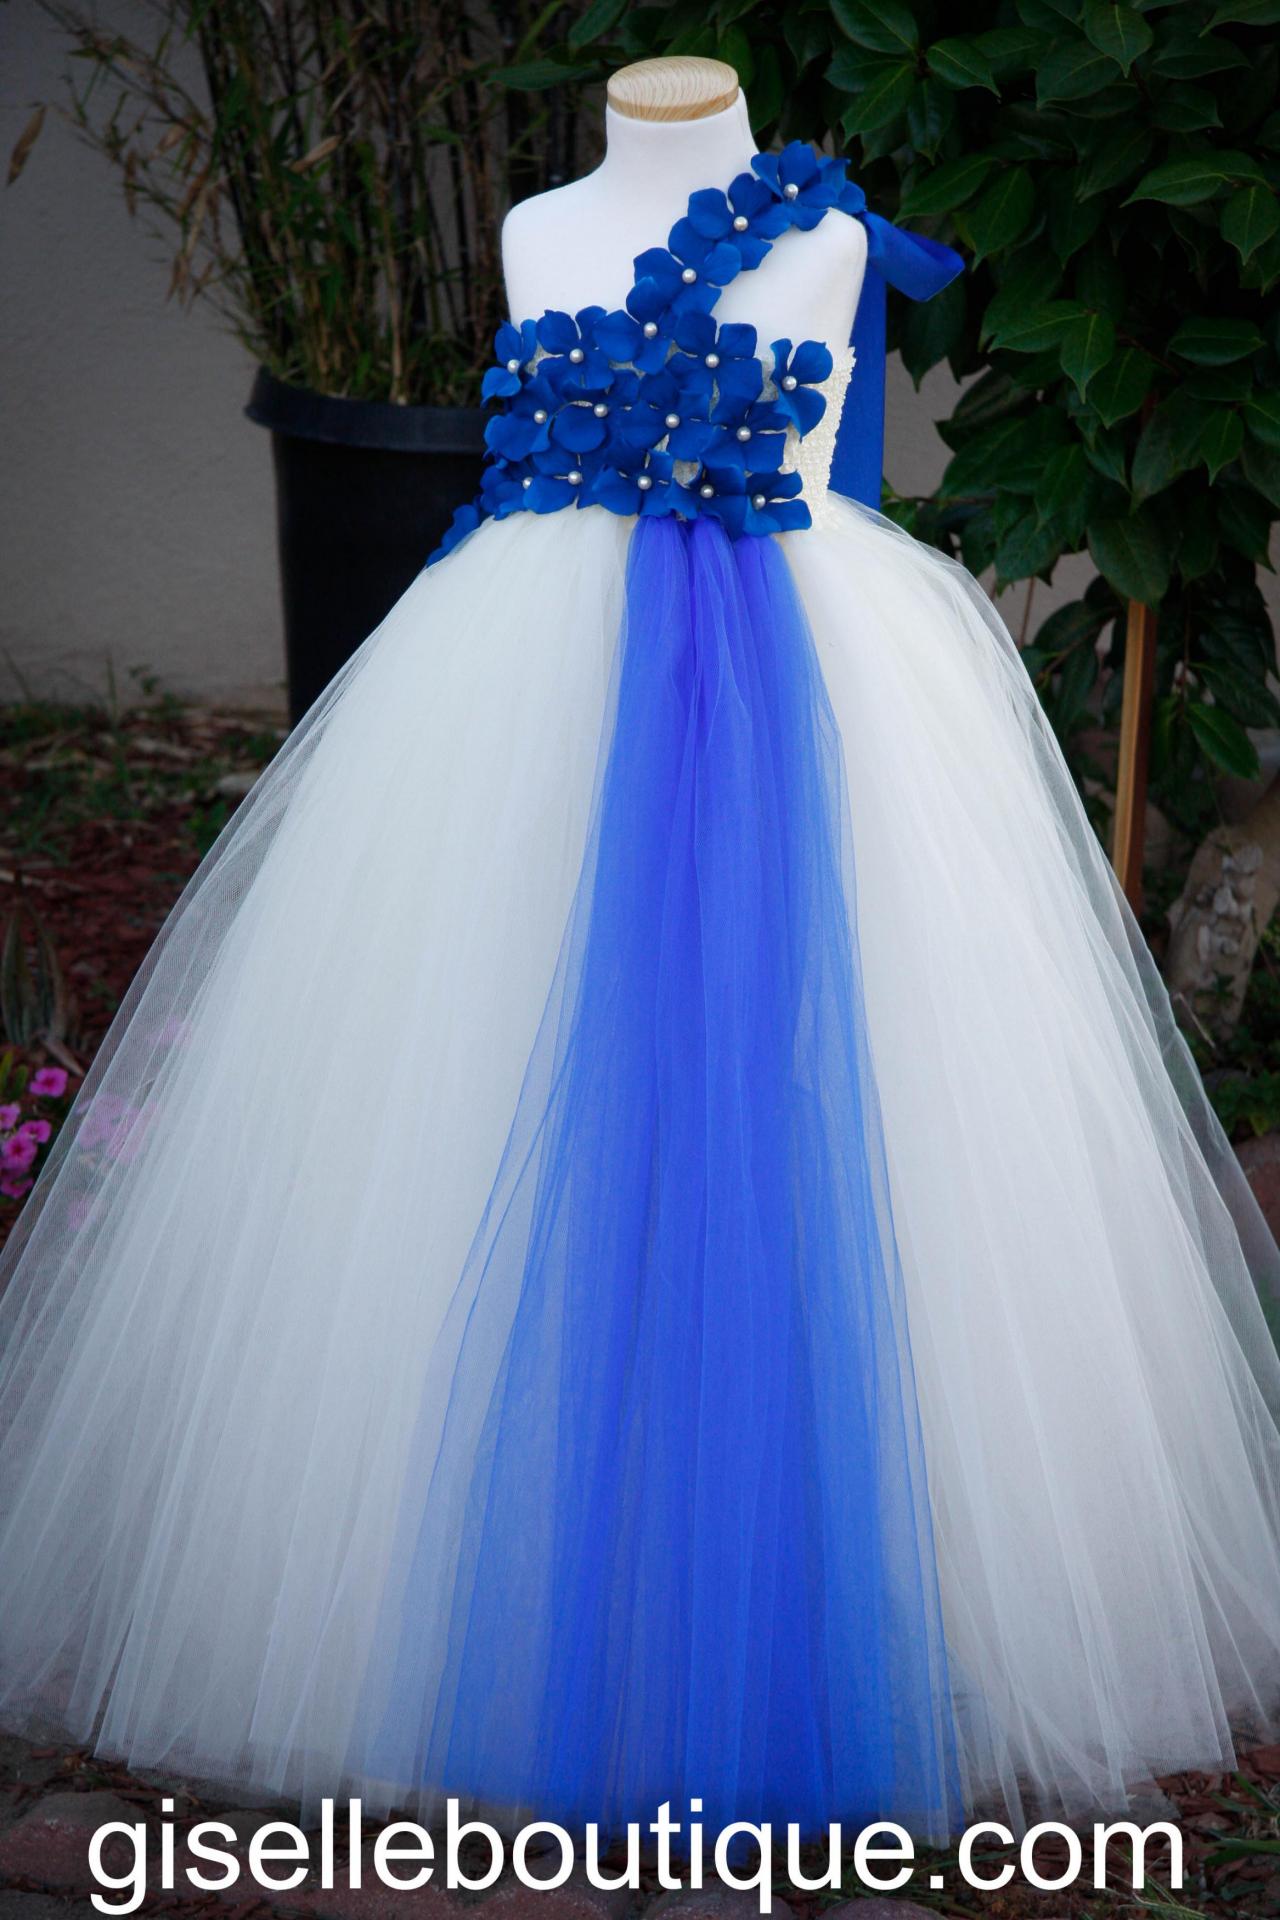 Flower Girl Dress. Blue And Ivory Tutu Dress . Baby Tutu Dress, Toddler Tutu Dress, Wedding, Birthday, Newborn